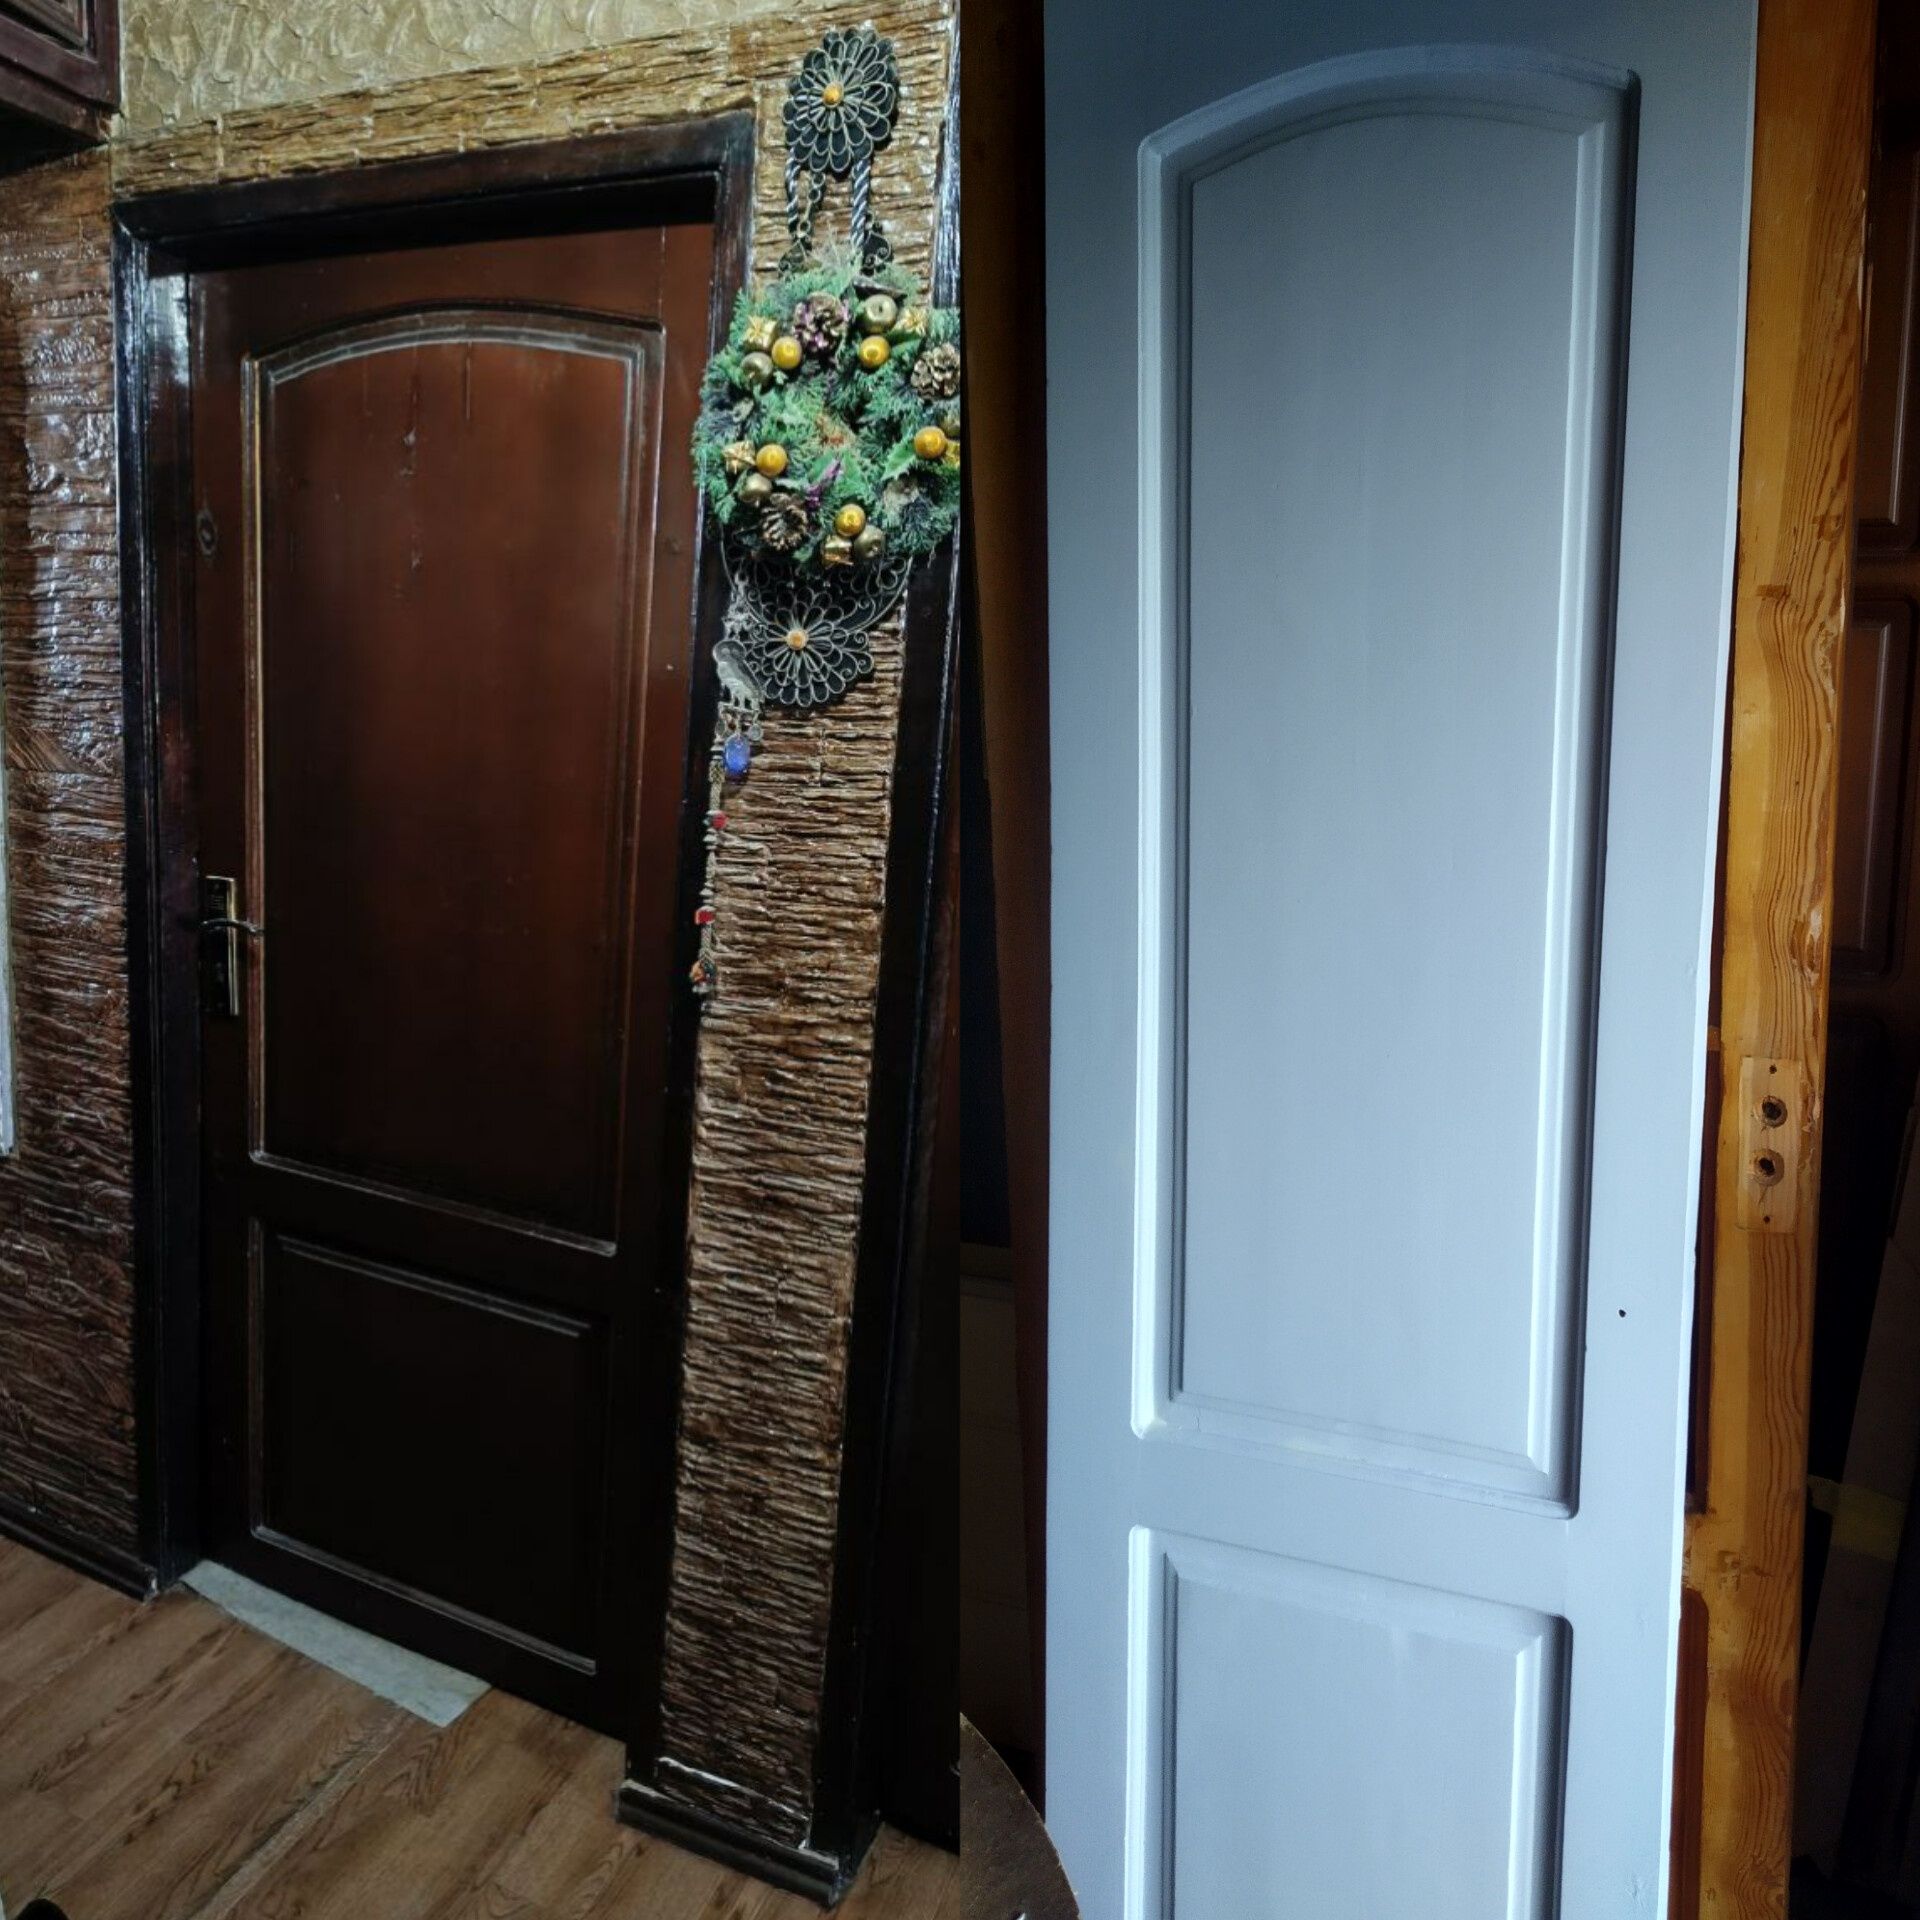 Реставрация межкомнатных дверей